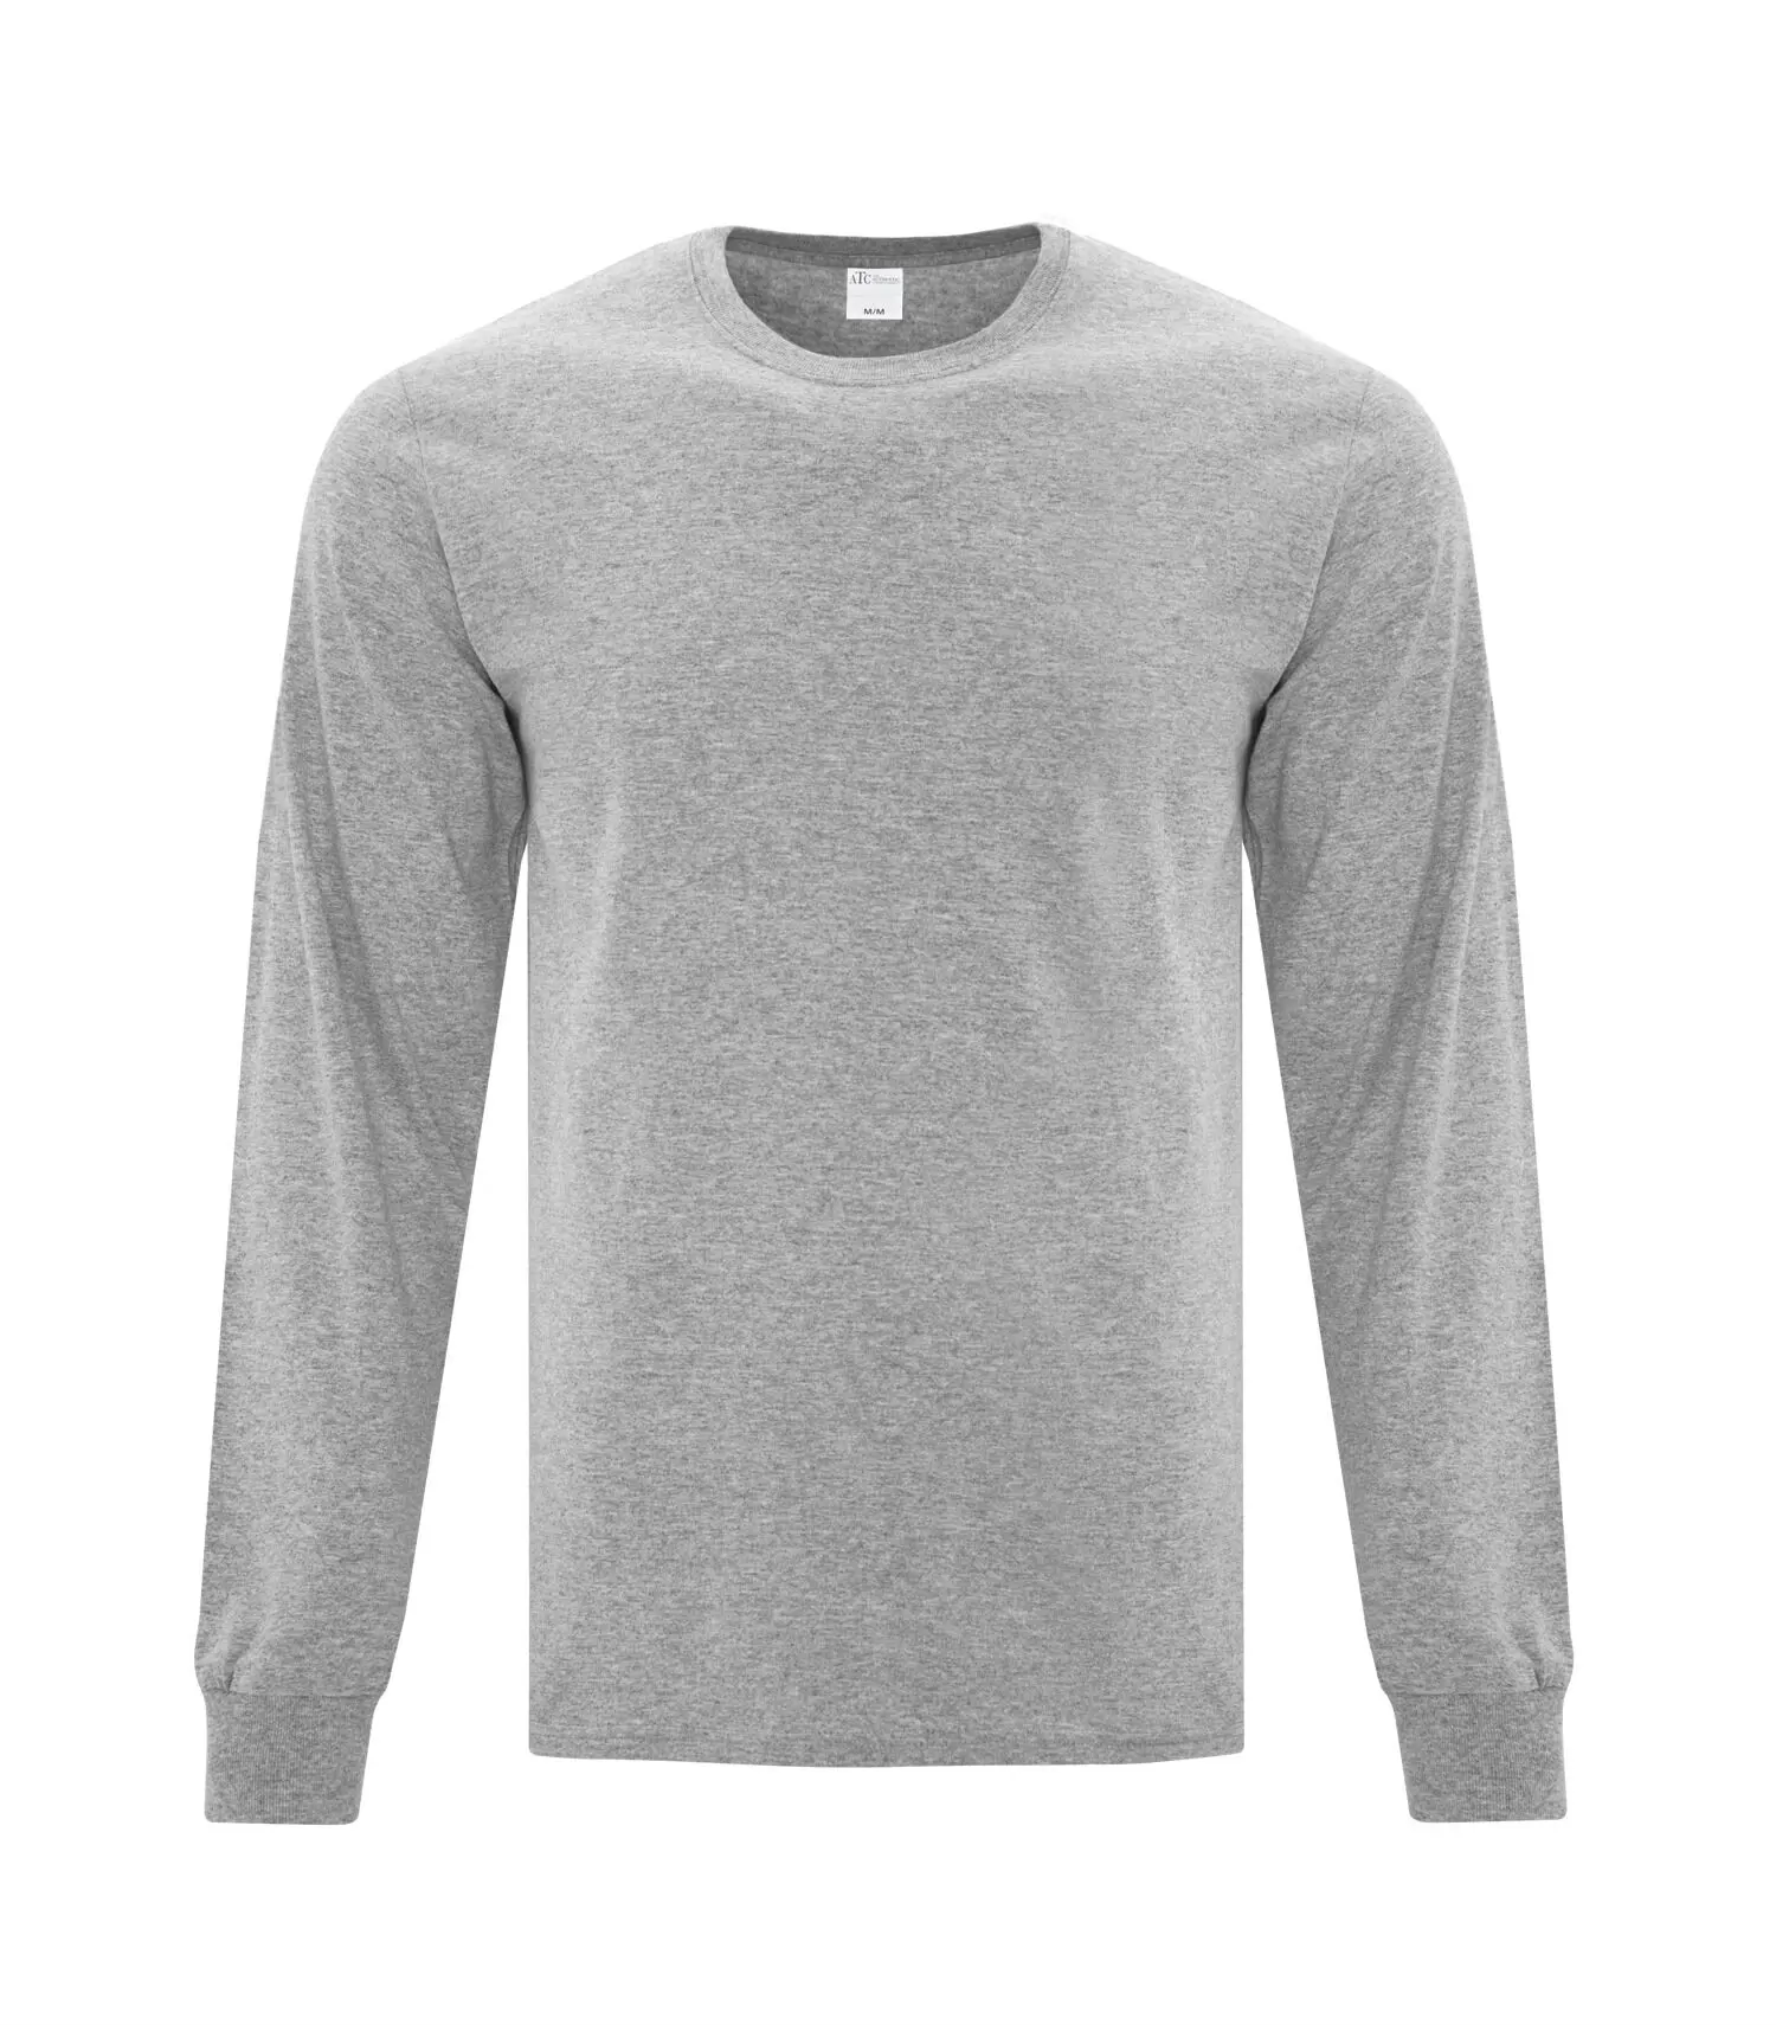 Adult Everyday Long Sleeve Shirt - Cotton - ATCS1015